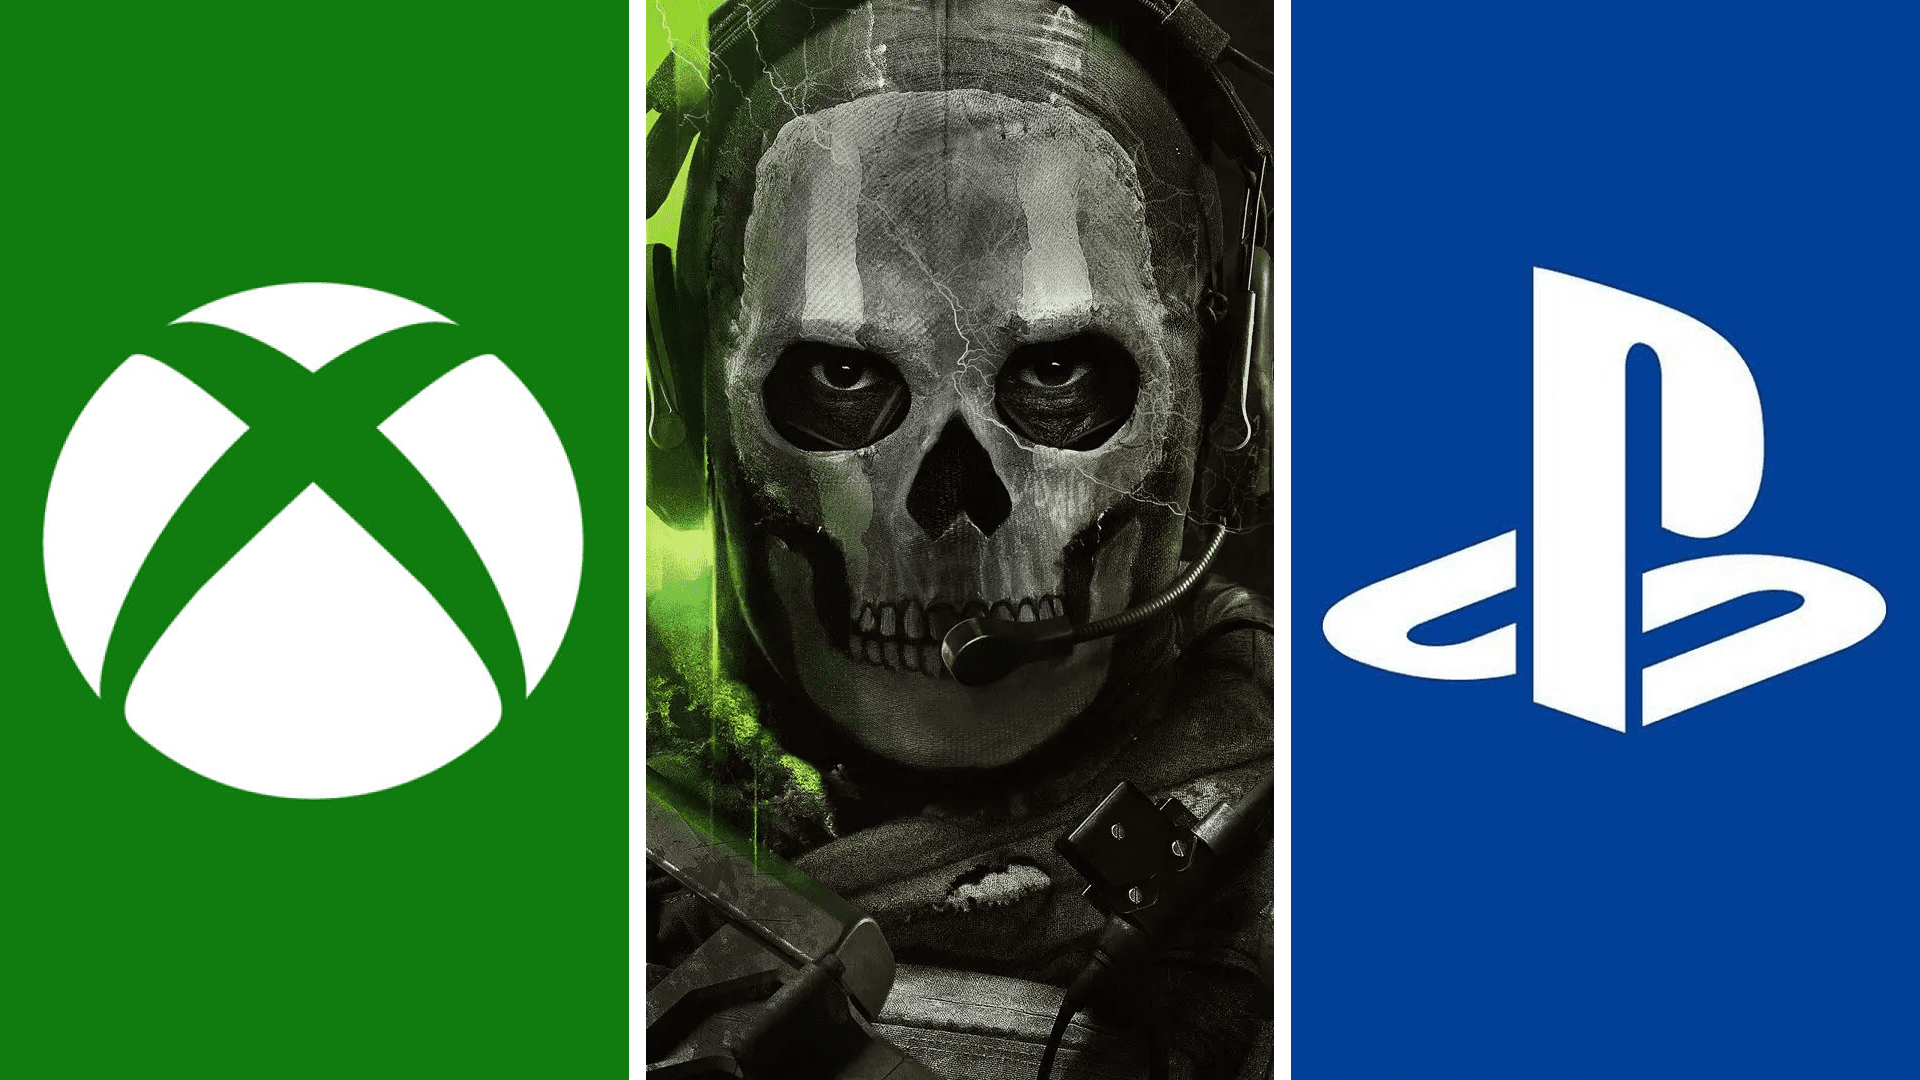 Xbox logo Call of Duty art and PlayStation logo